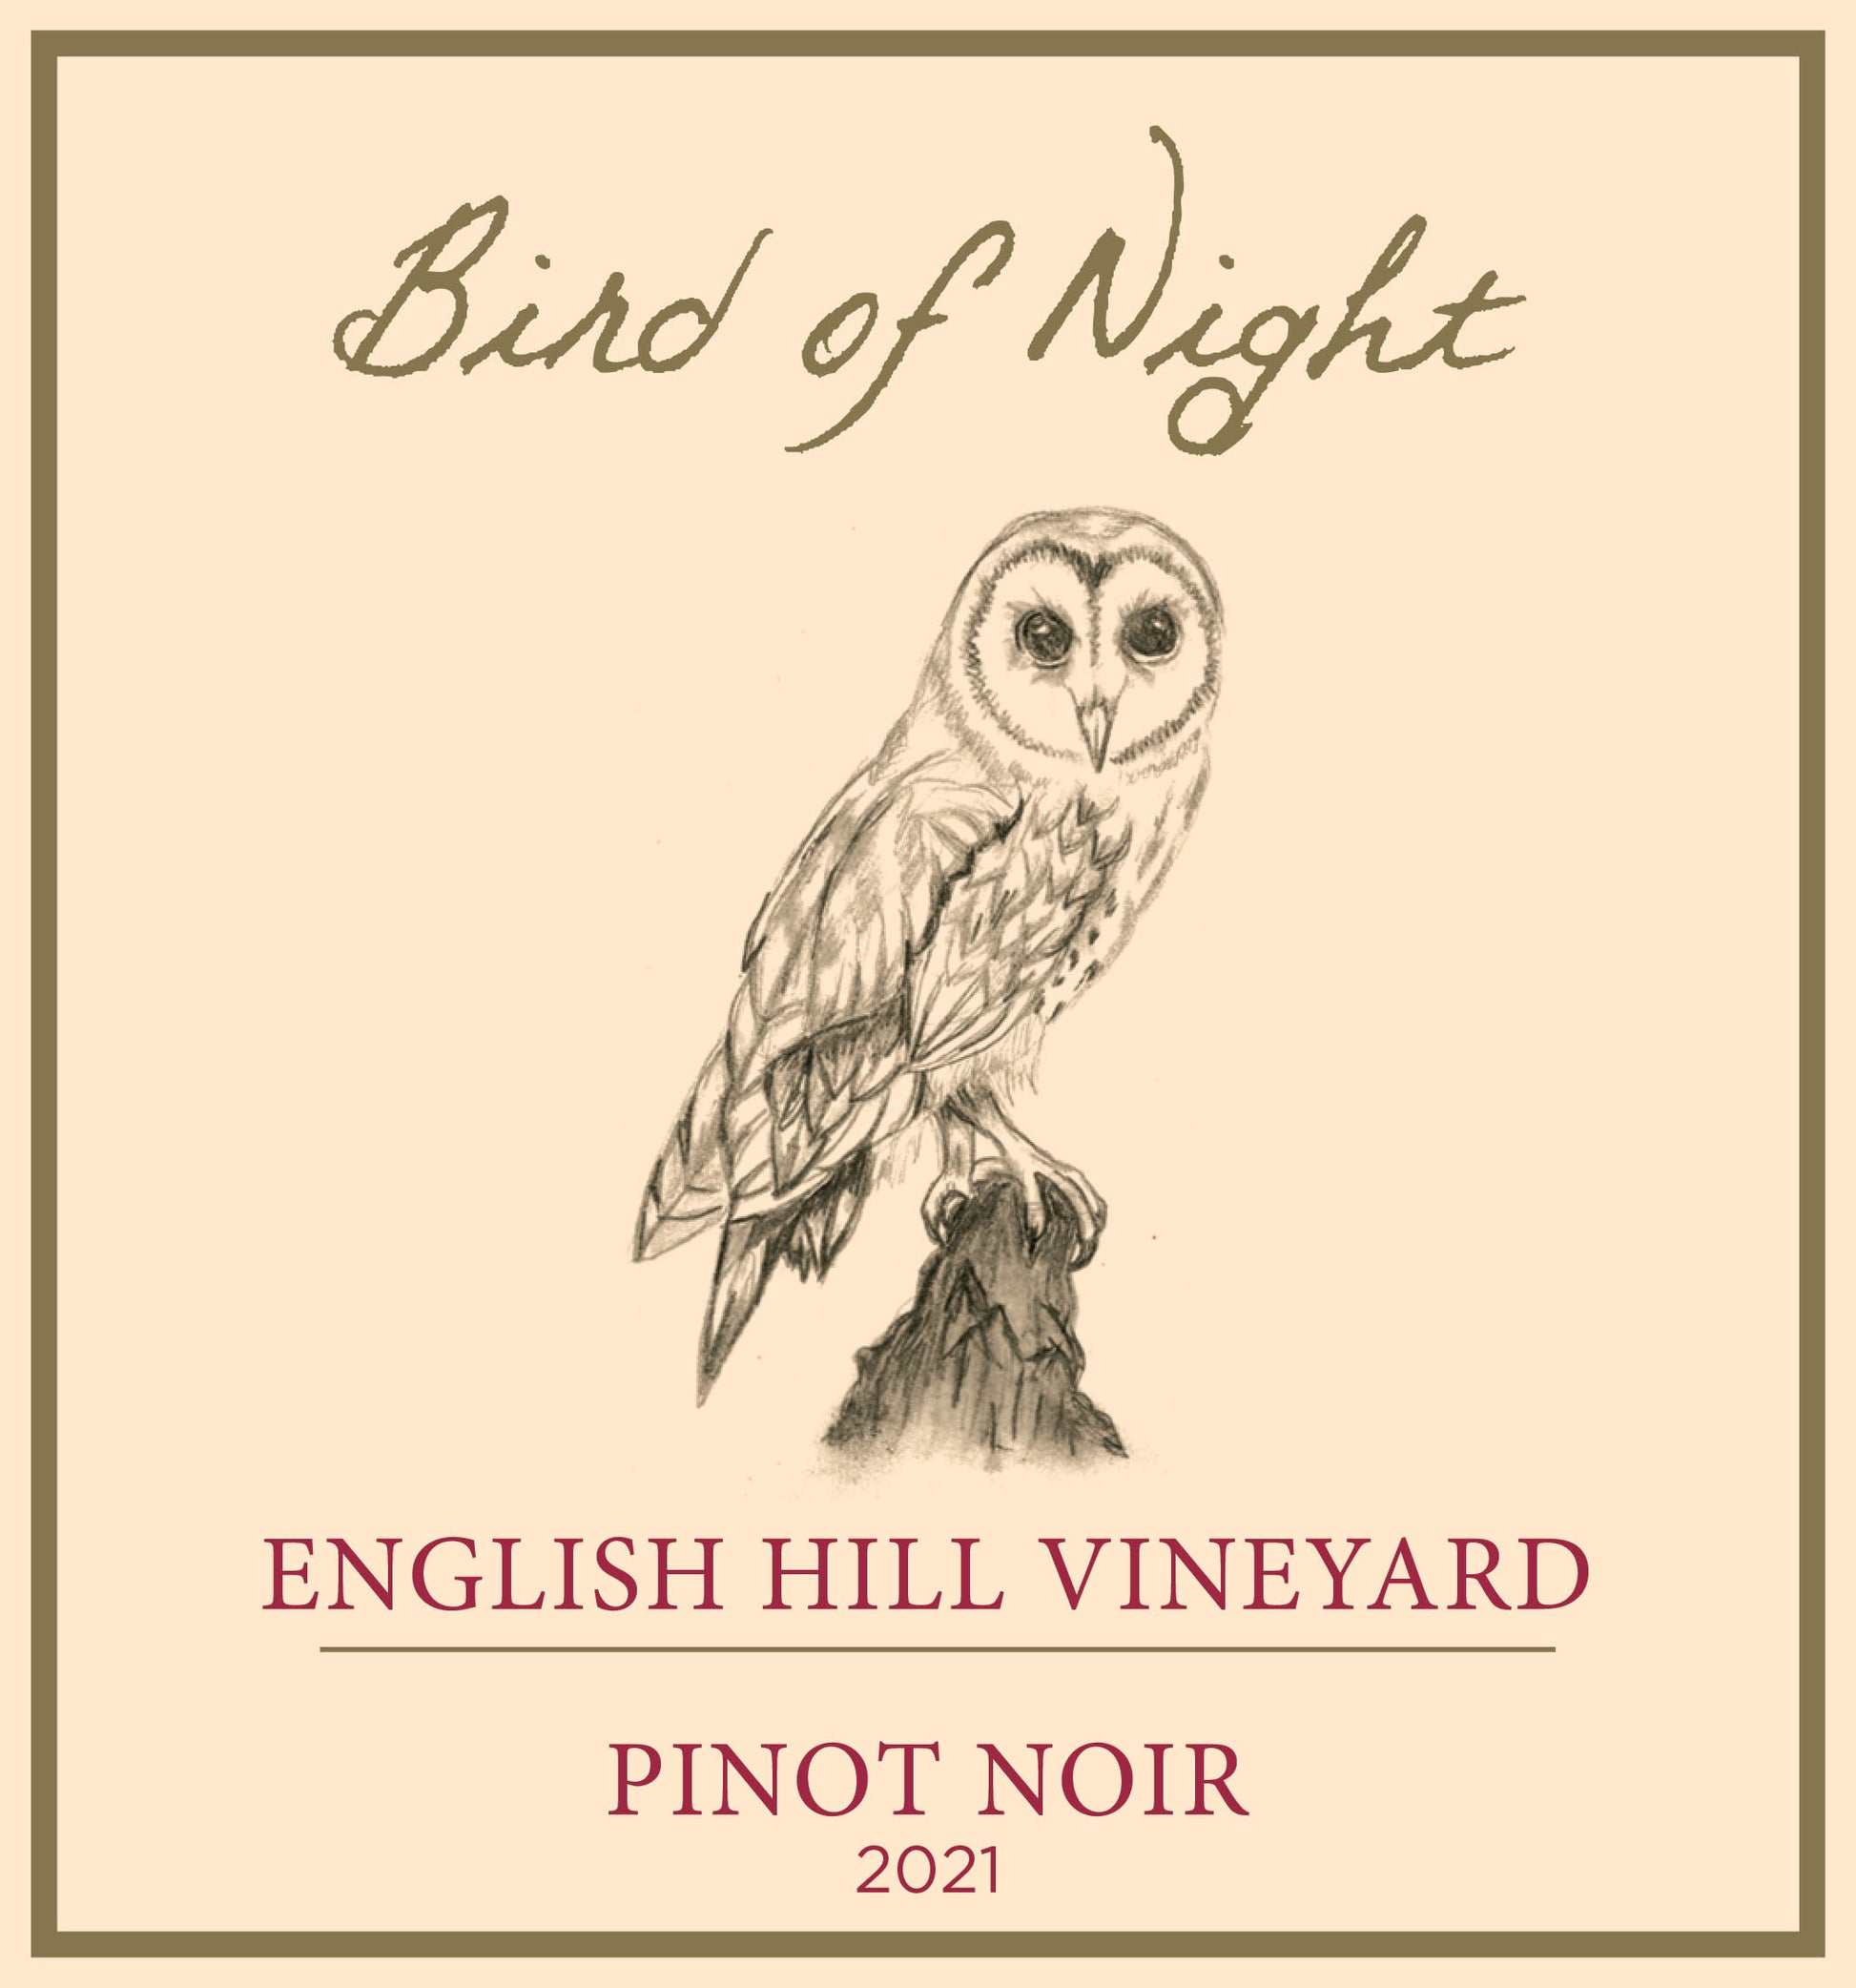 Bird of Night English Hill Vineyard Pinot Noir wine label